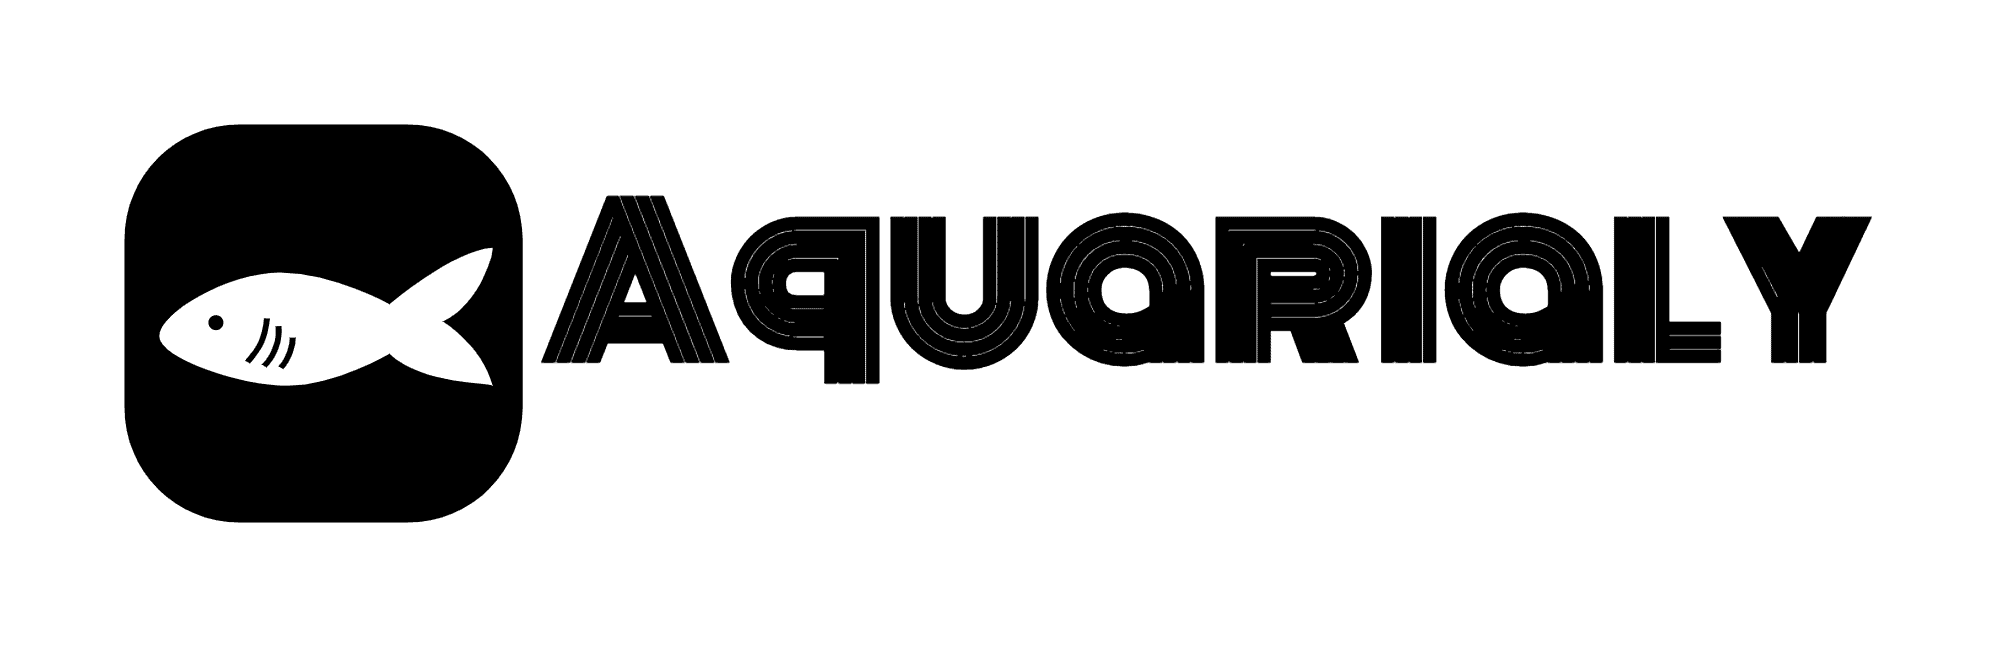 Aquarialy-logo